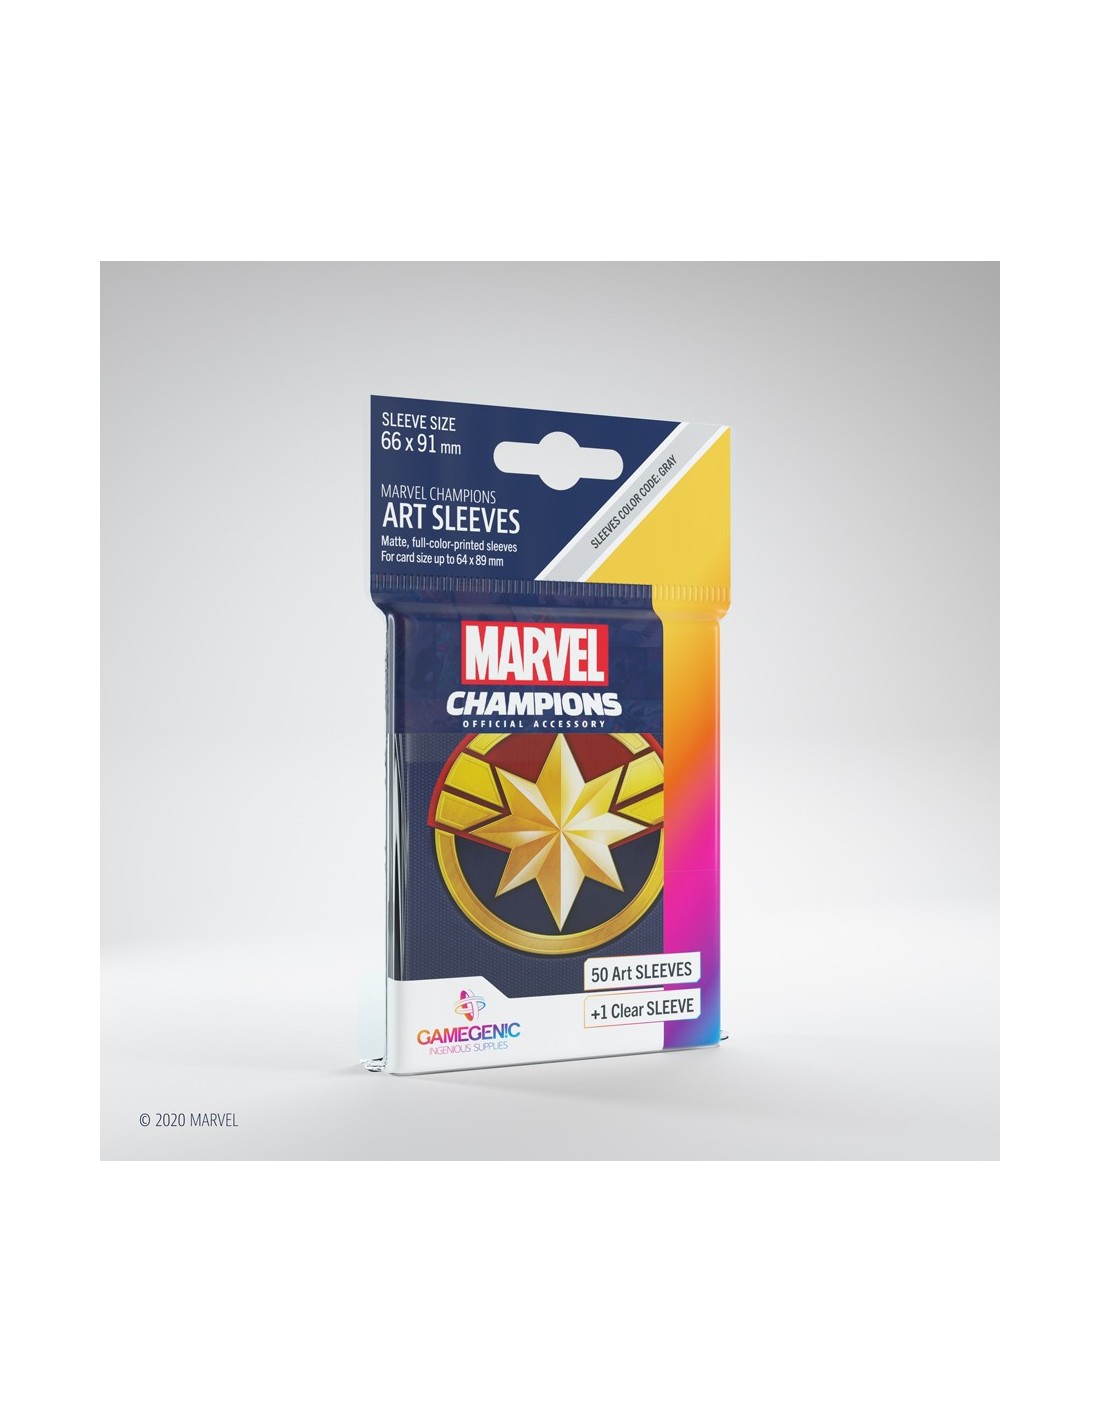 Se Marvel Champions Black Panther Art sleeves - 50 stk - plastiklommer - GameGenic hos NextLevelGames.dk